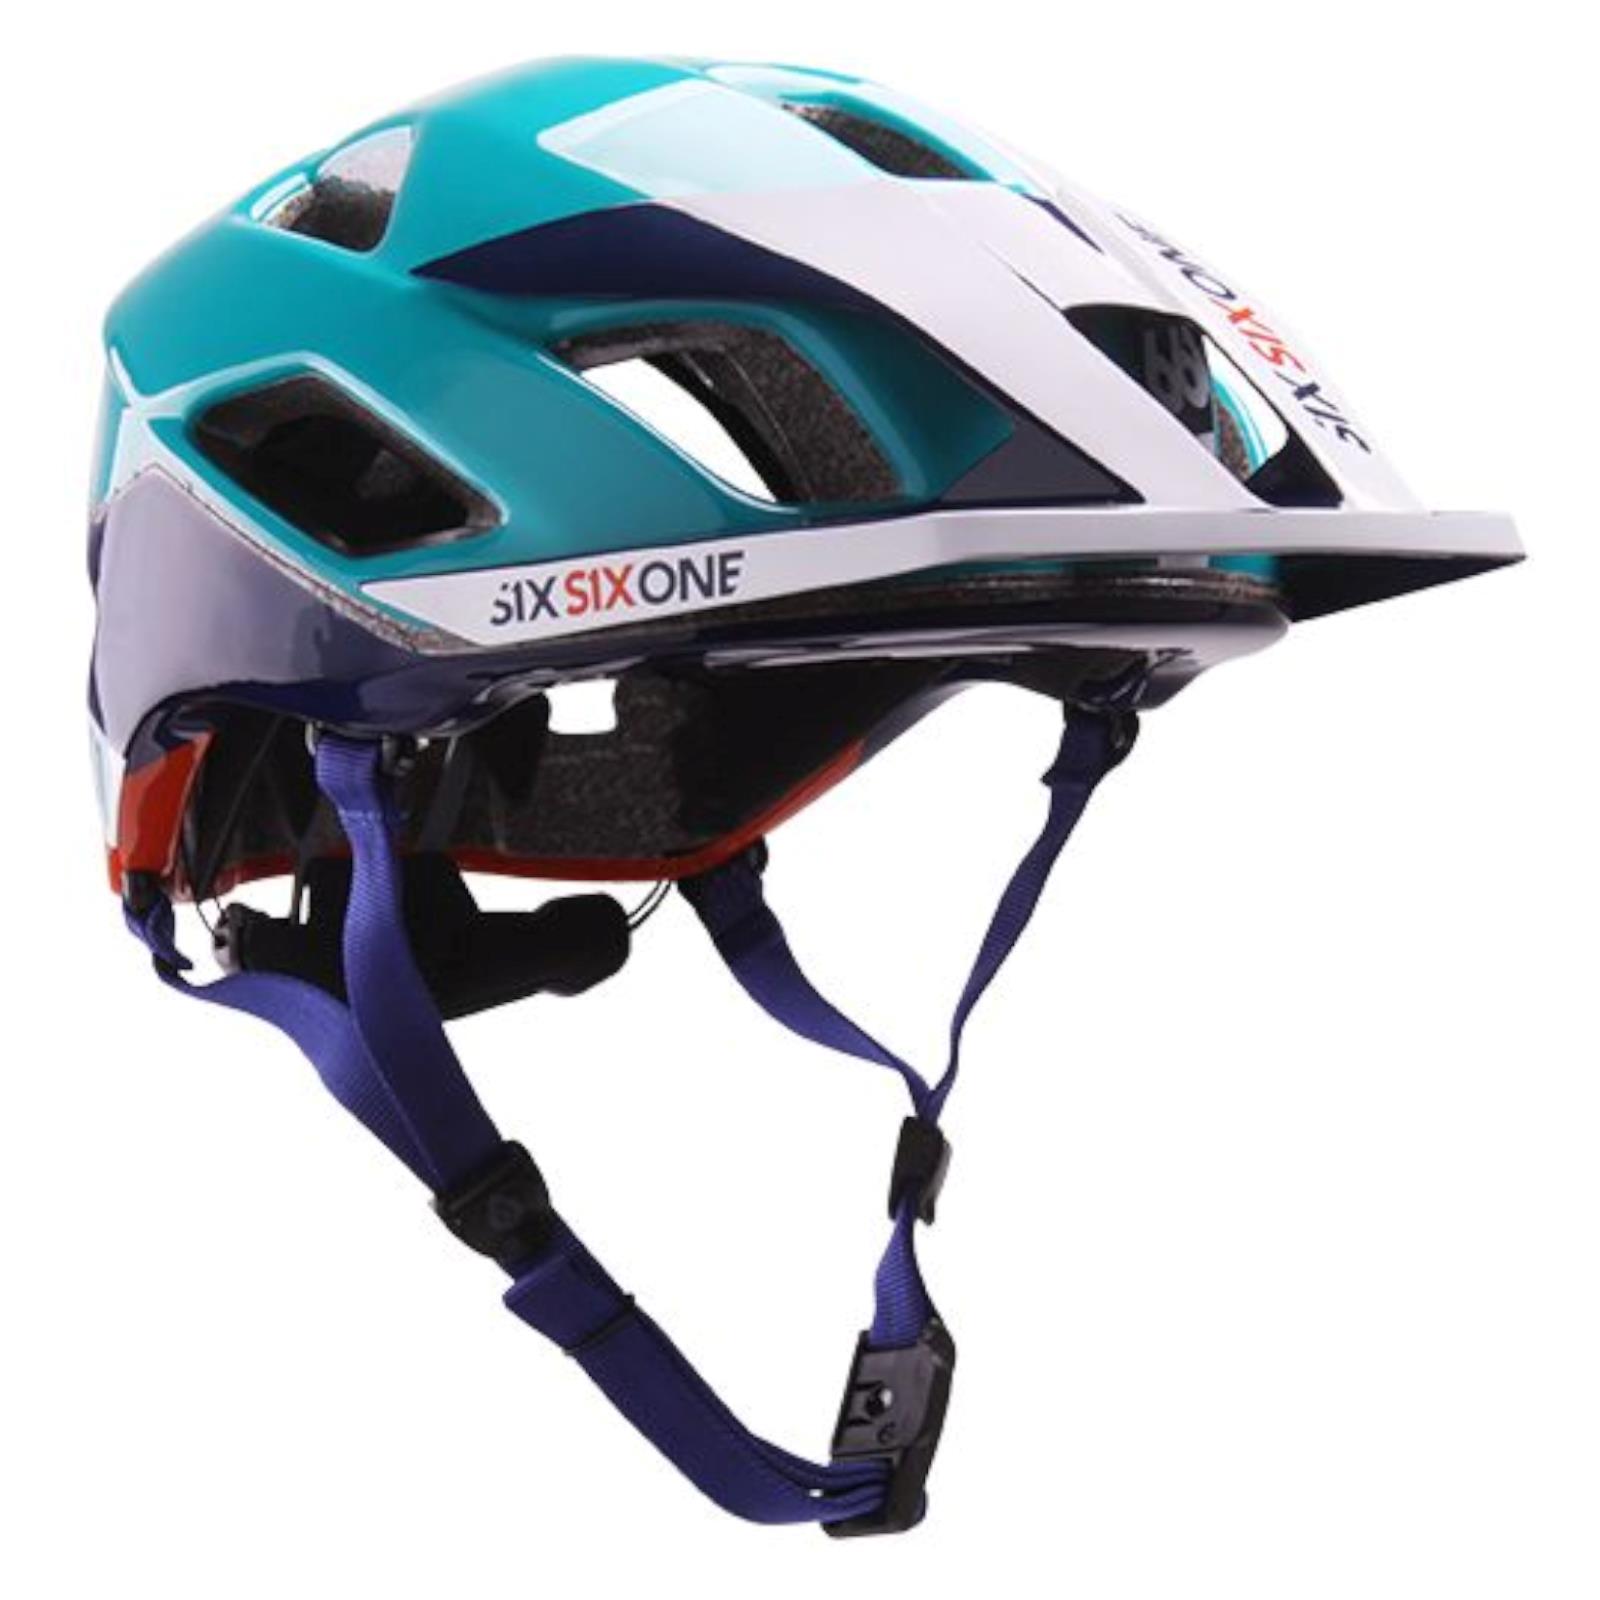 SixSixOne Cycling Helmet EVO AM Mountain Bike MTB Protective Helmet Head Protection Bike Sport 